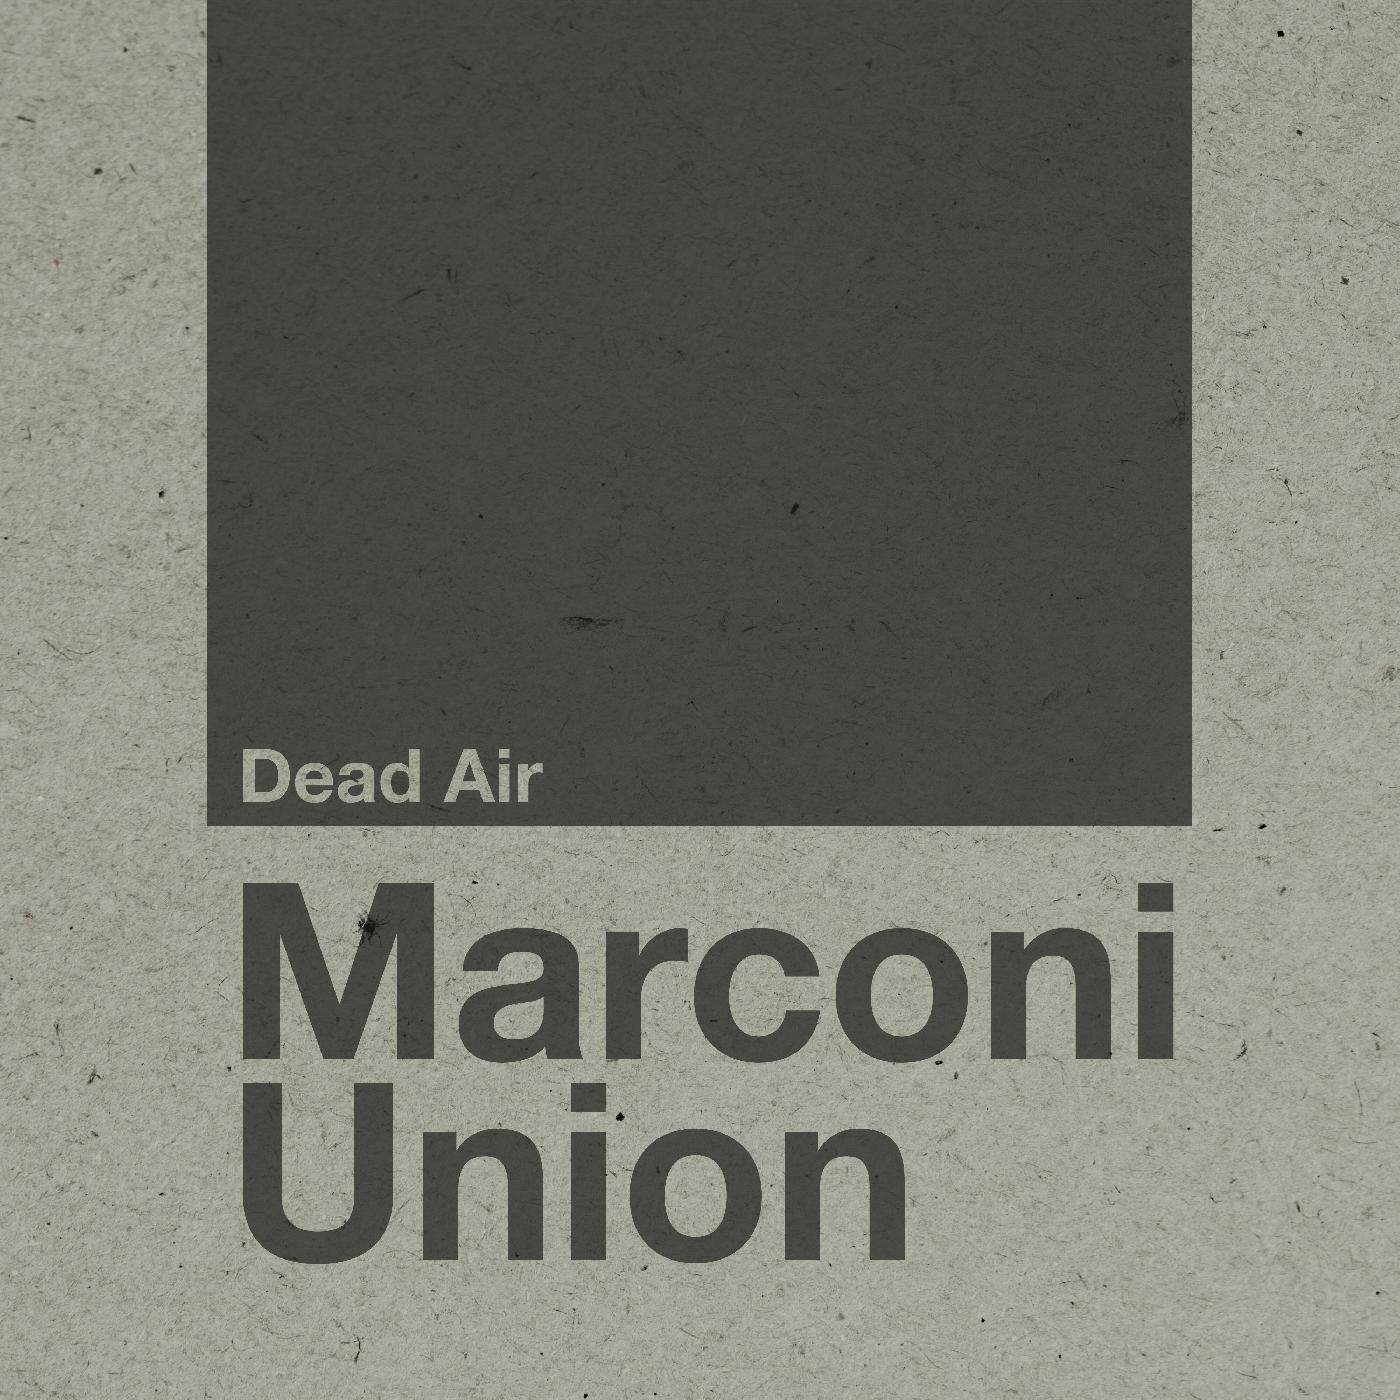 Marconi Union DEAD AIR CD